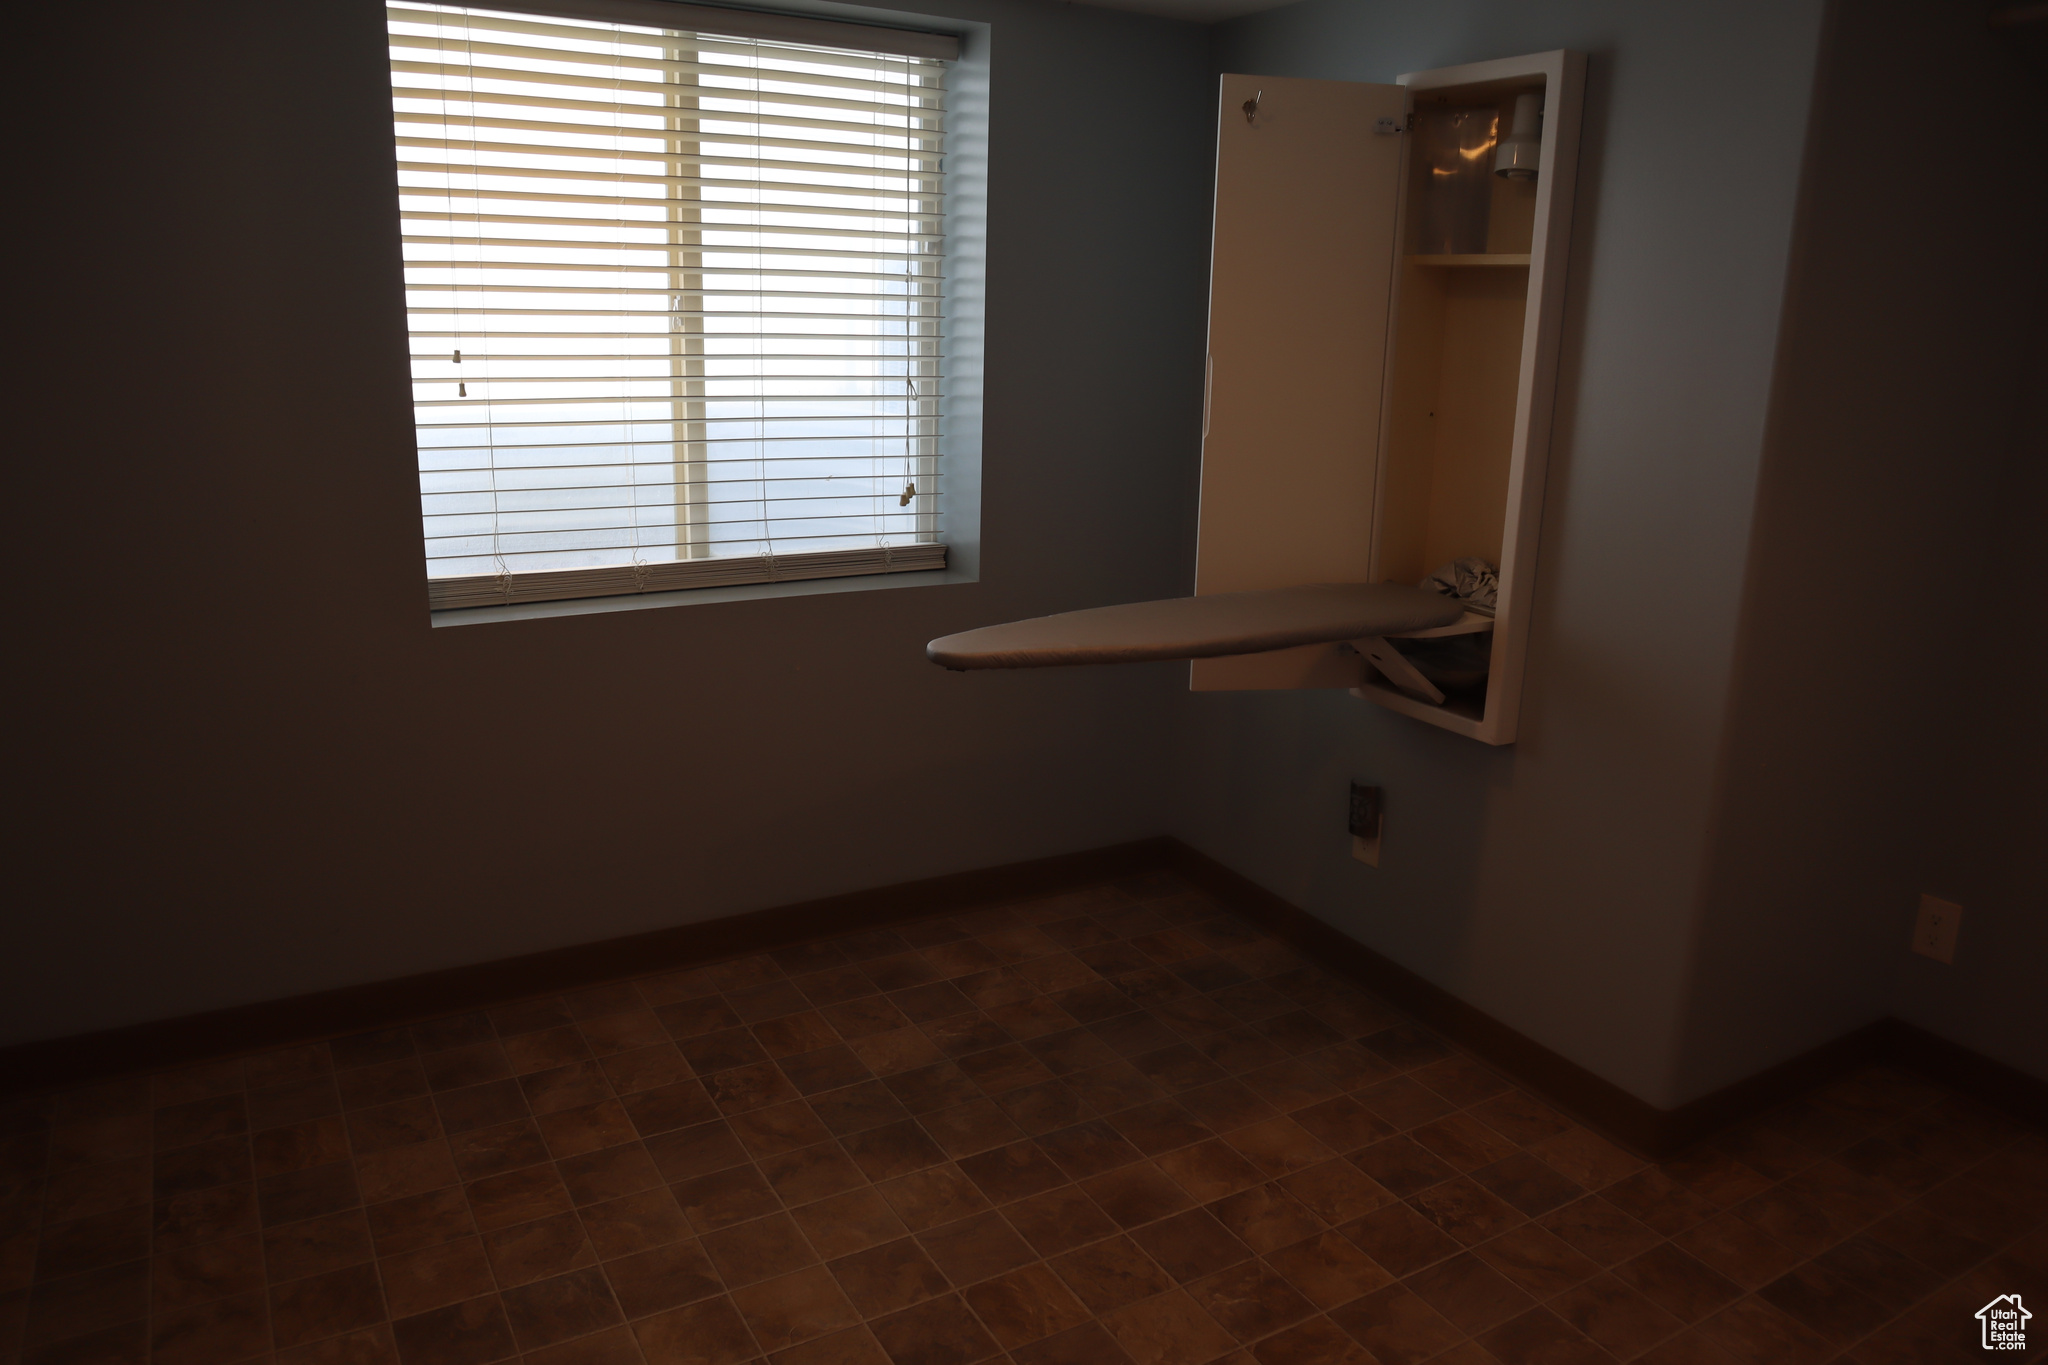 Unfurnished bedroom featuring tile flooring